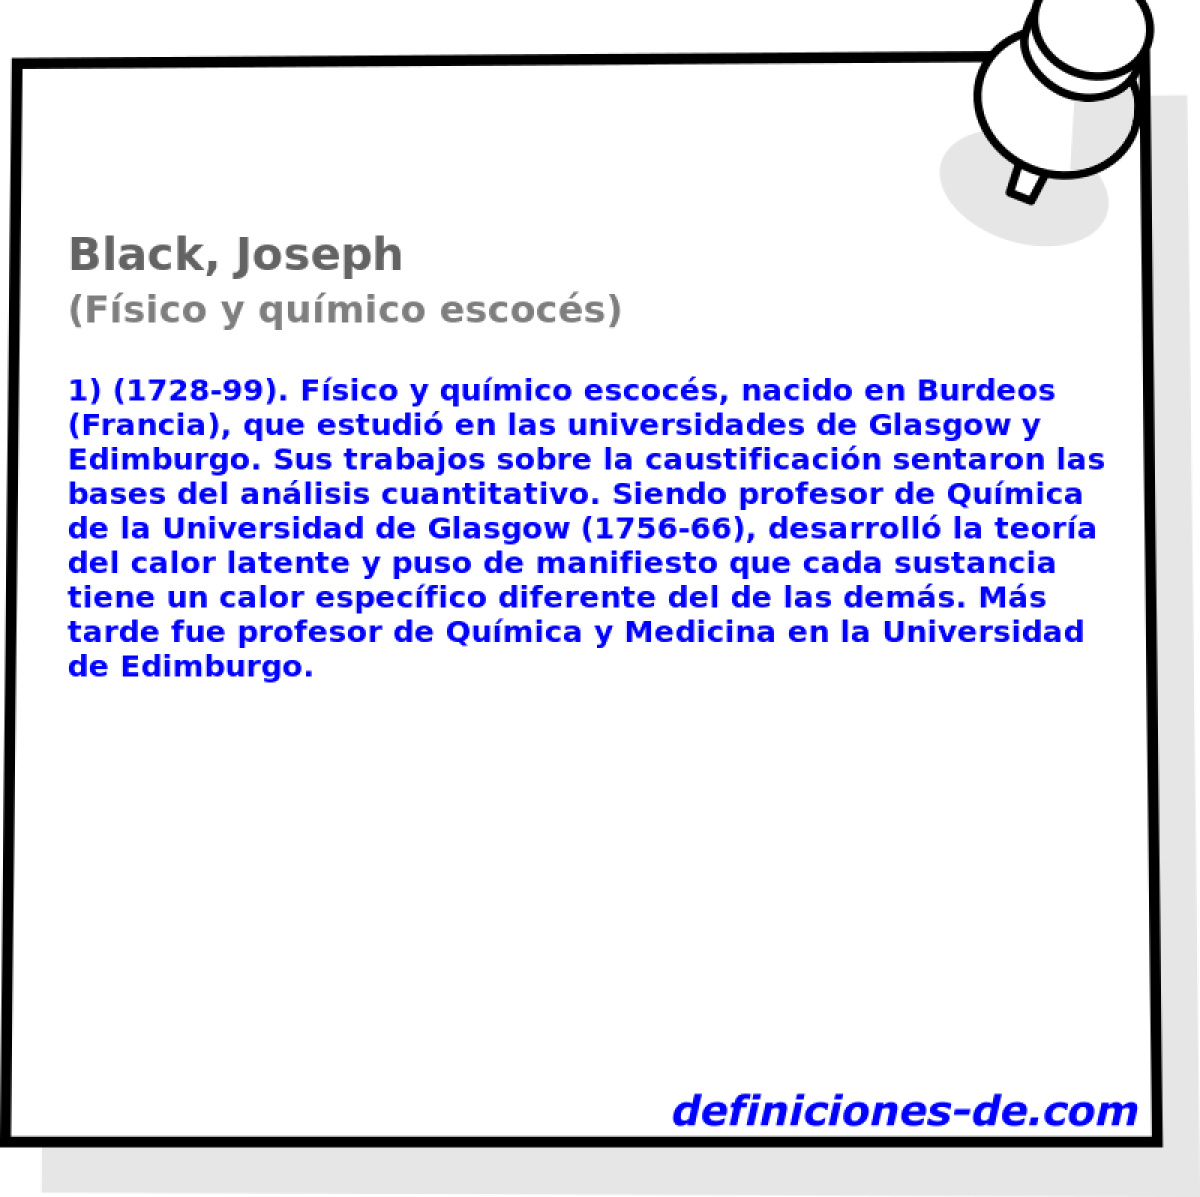 Black, Joseph (Fsico y qumico escocs)